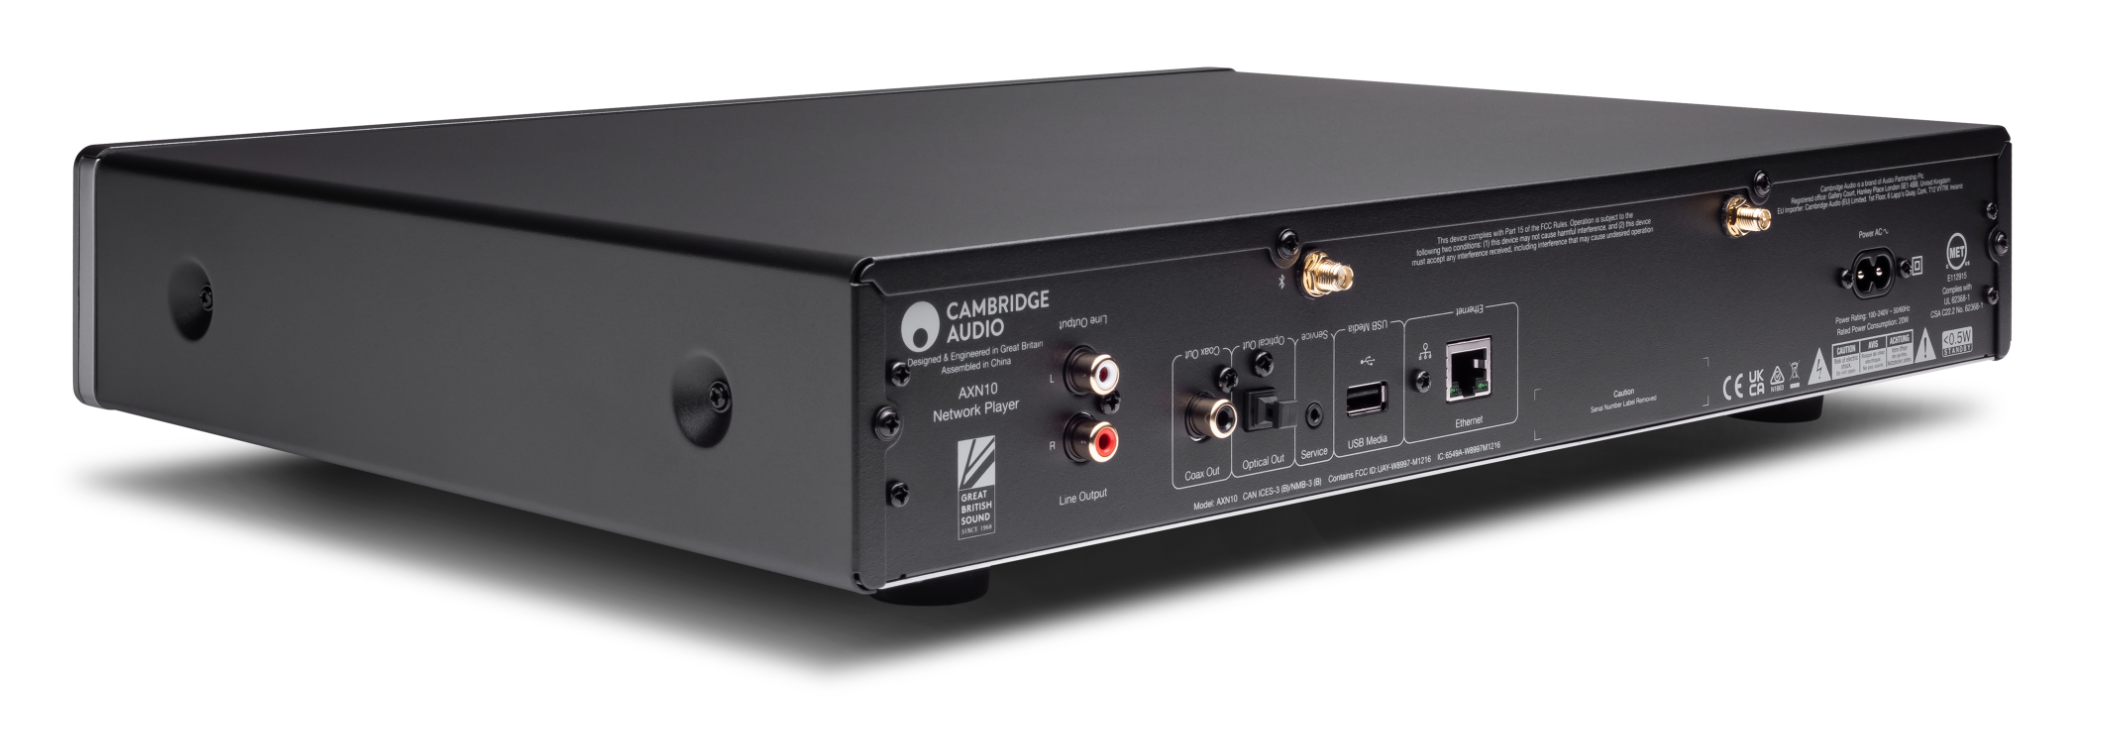 Network Player AXN10 Cambridge Audio